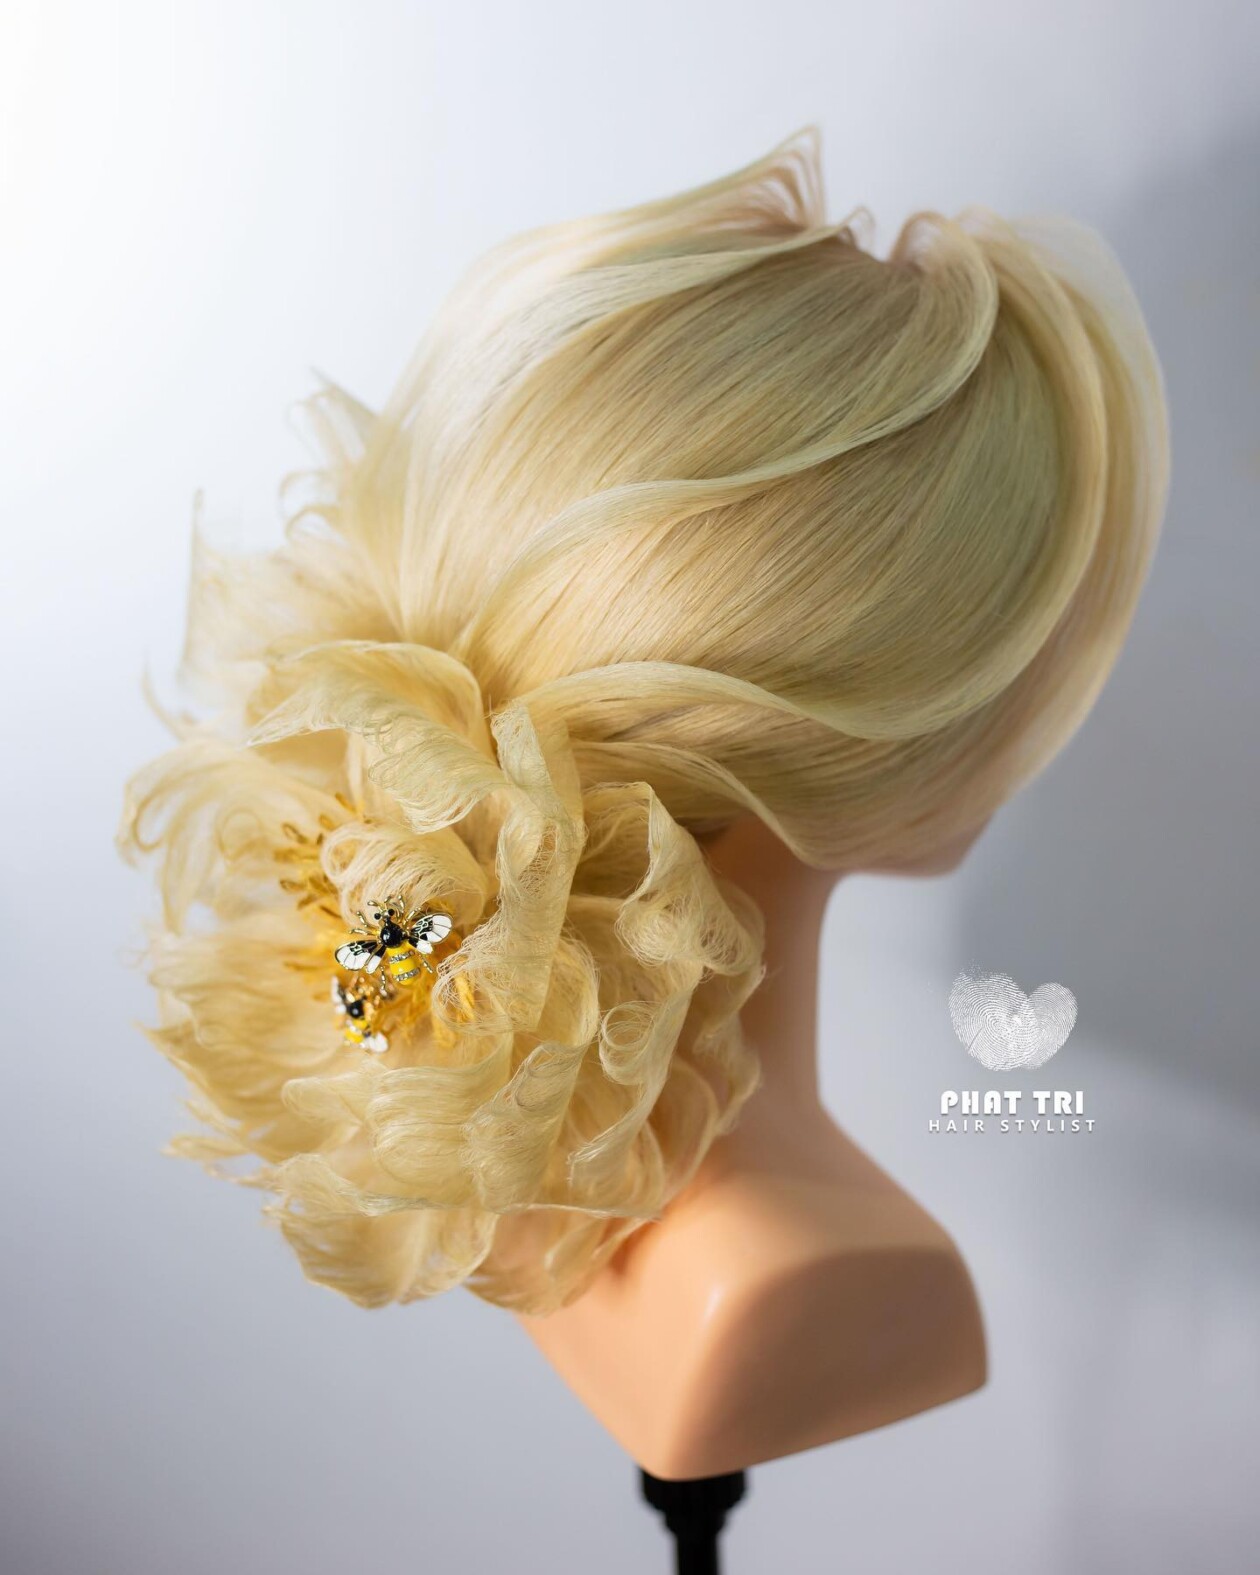 Beautiful Hairstyles That Look Like Ornate Flowers By Nguyen Phat Tri (2)